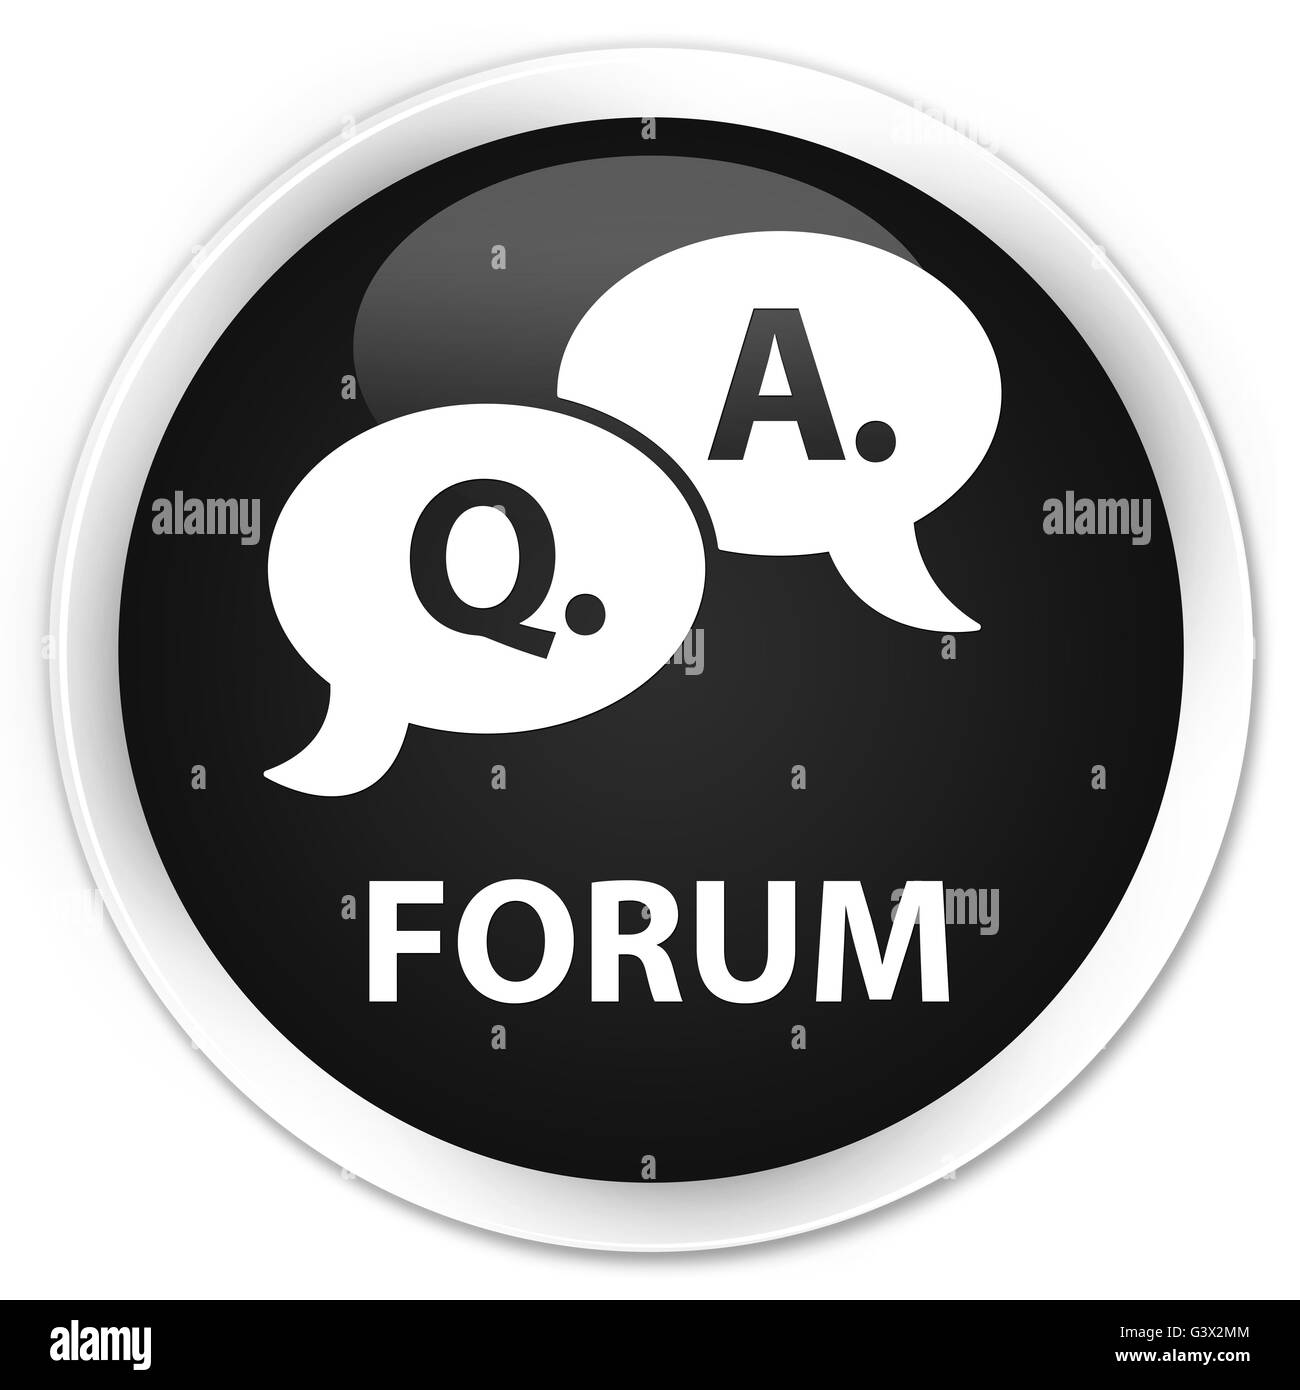 Forum (group icon) isolated on premium black round button abstract illustration Stock Photo